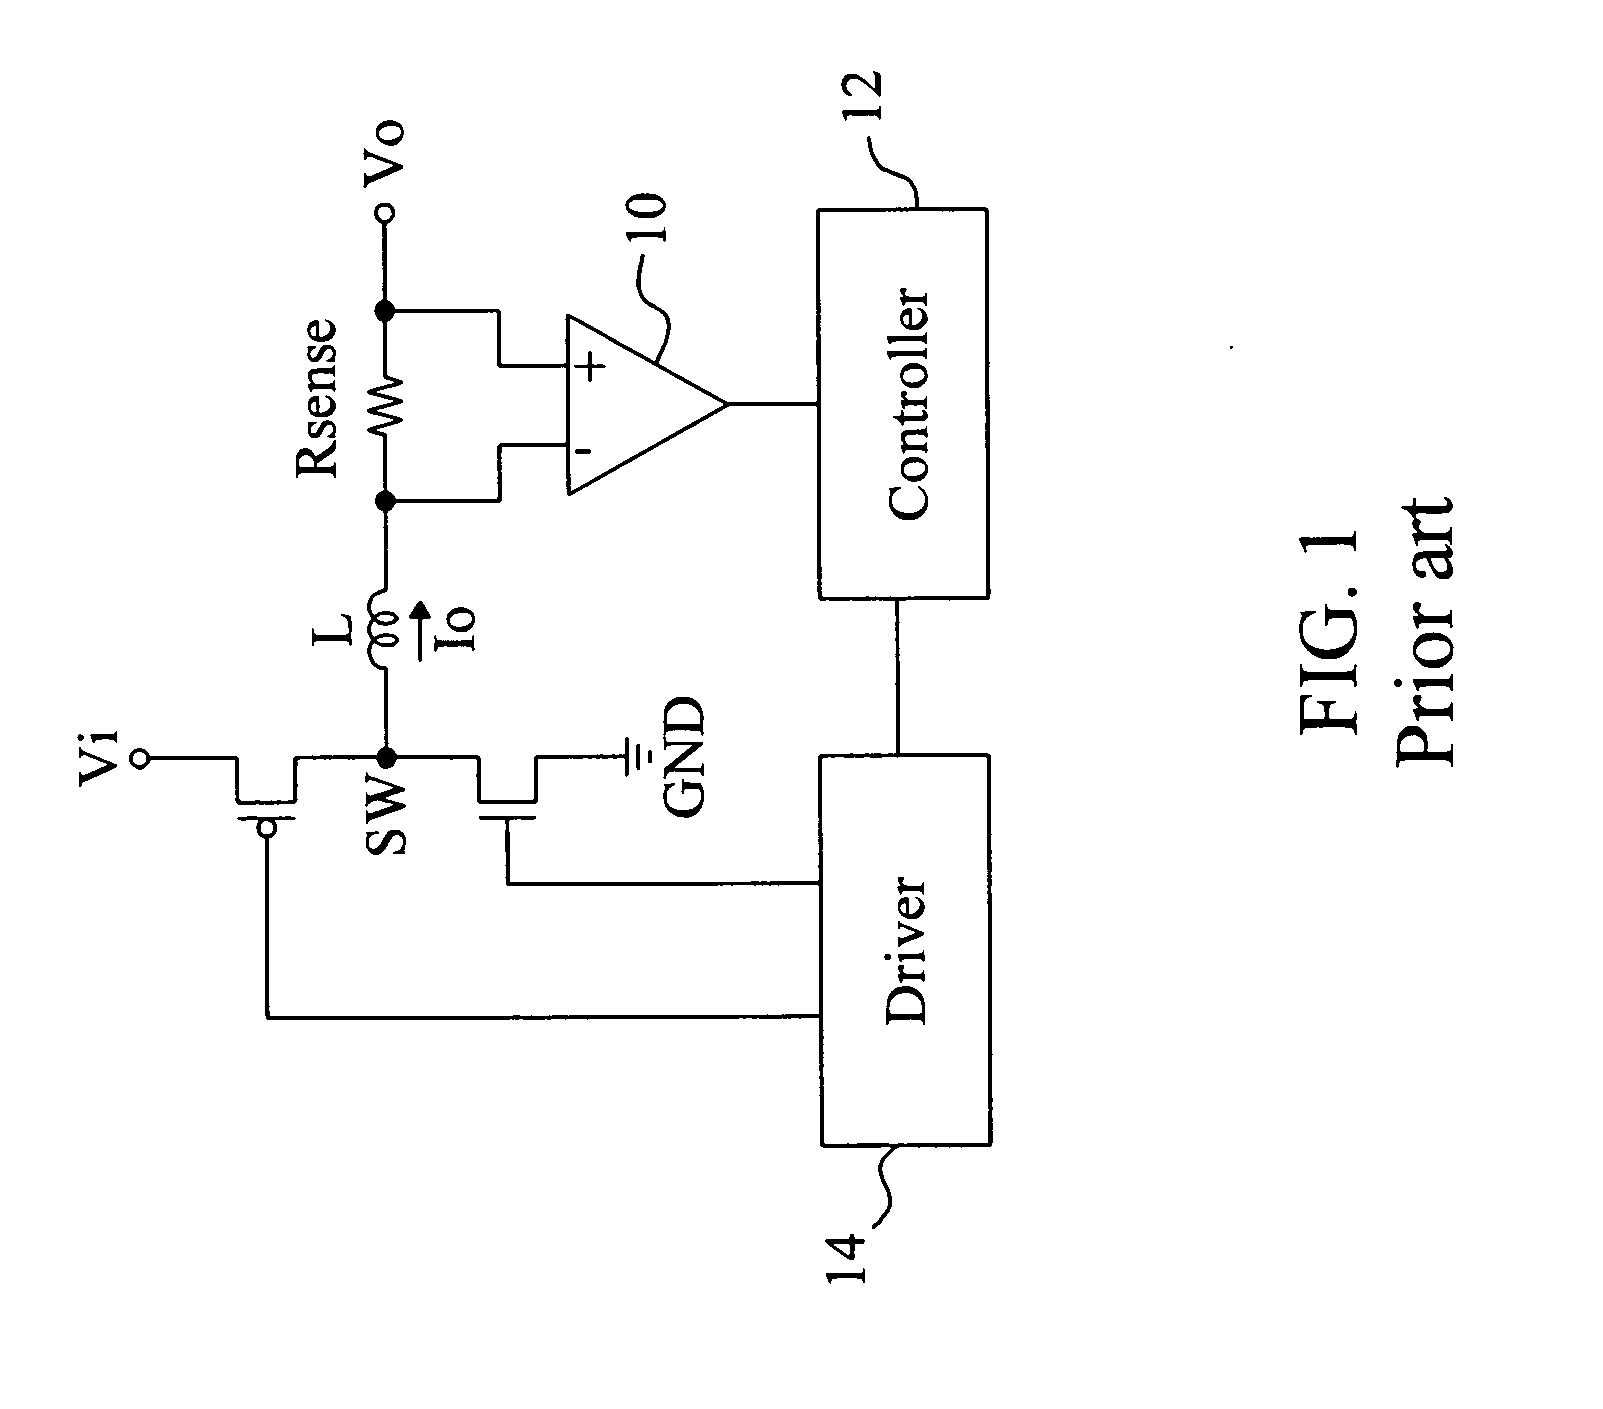 Output current detection of a voltage regulator